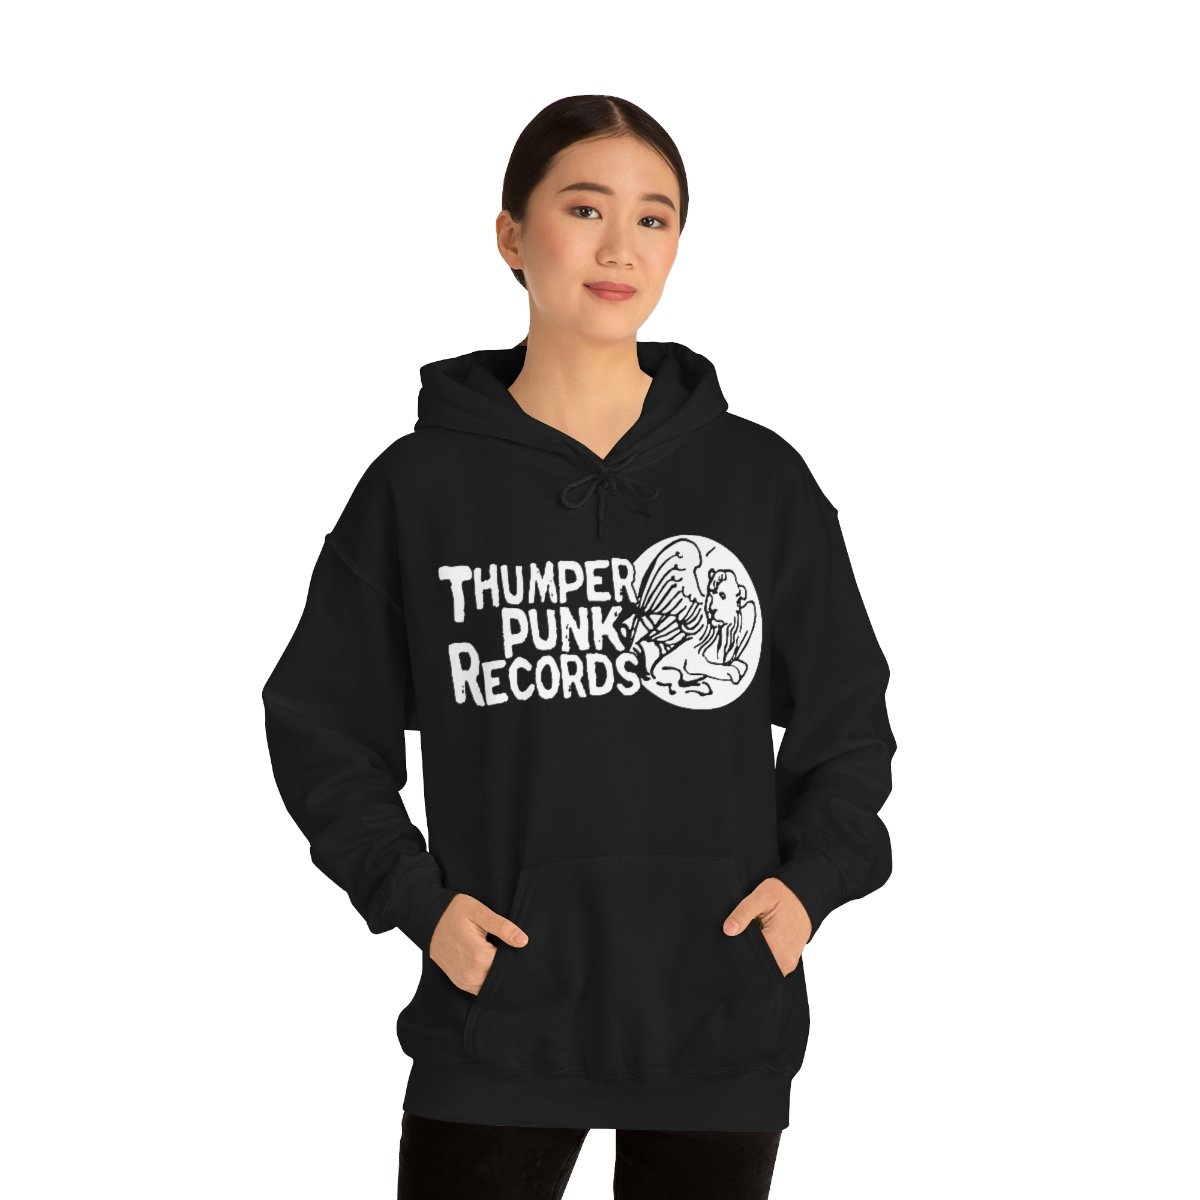 Thumper Punk Records Pullover Hooded Sweatshirt